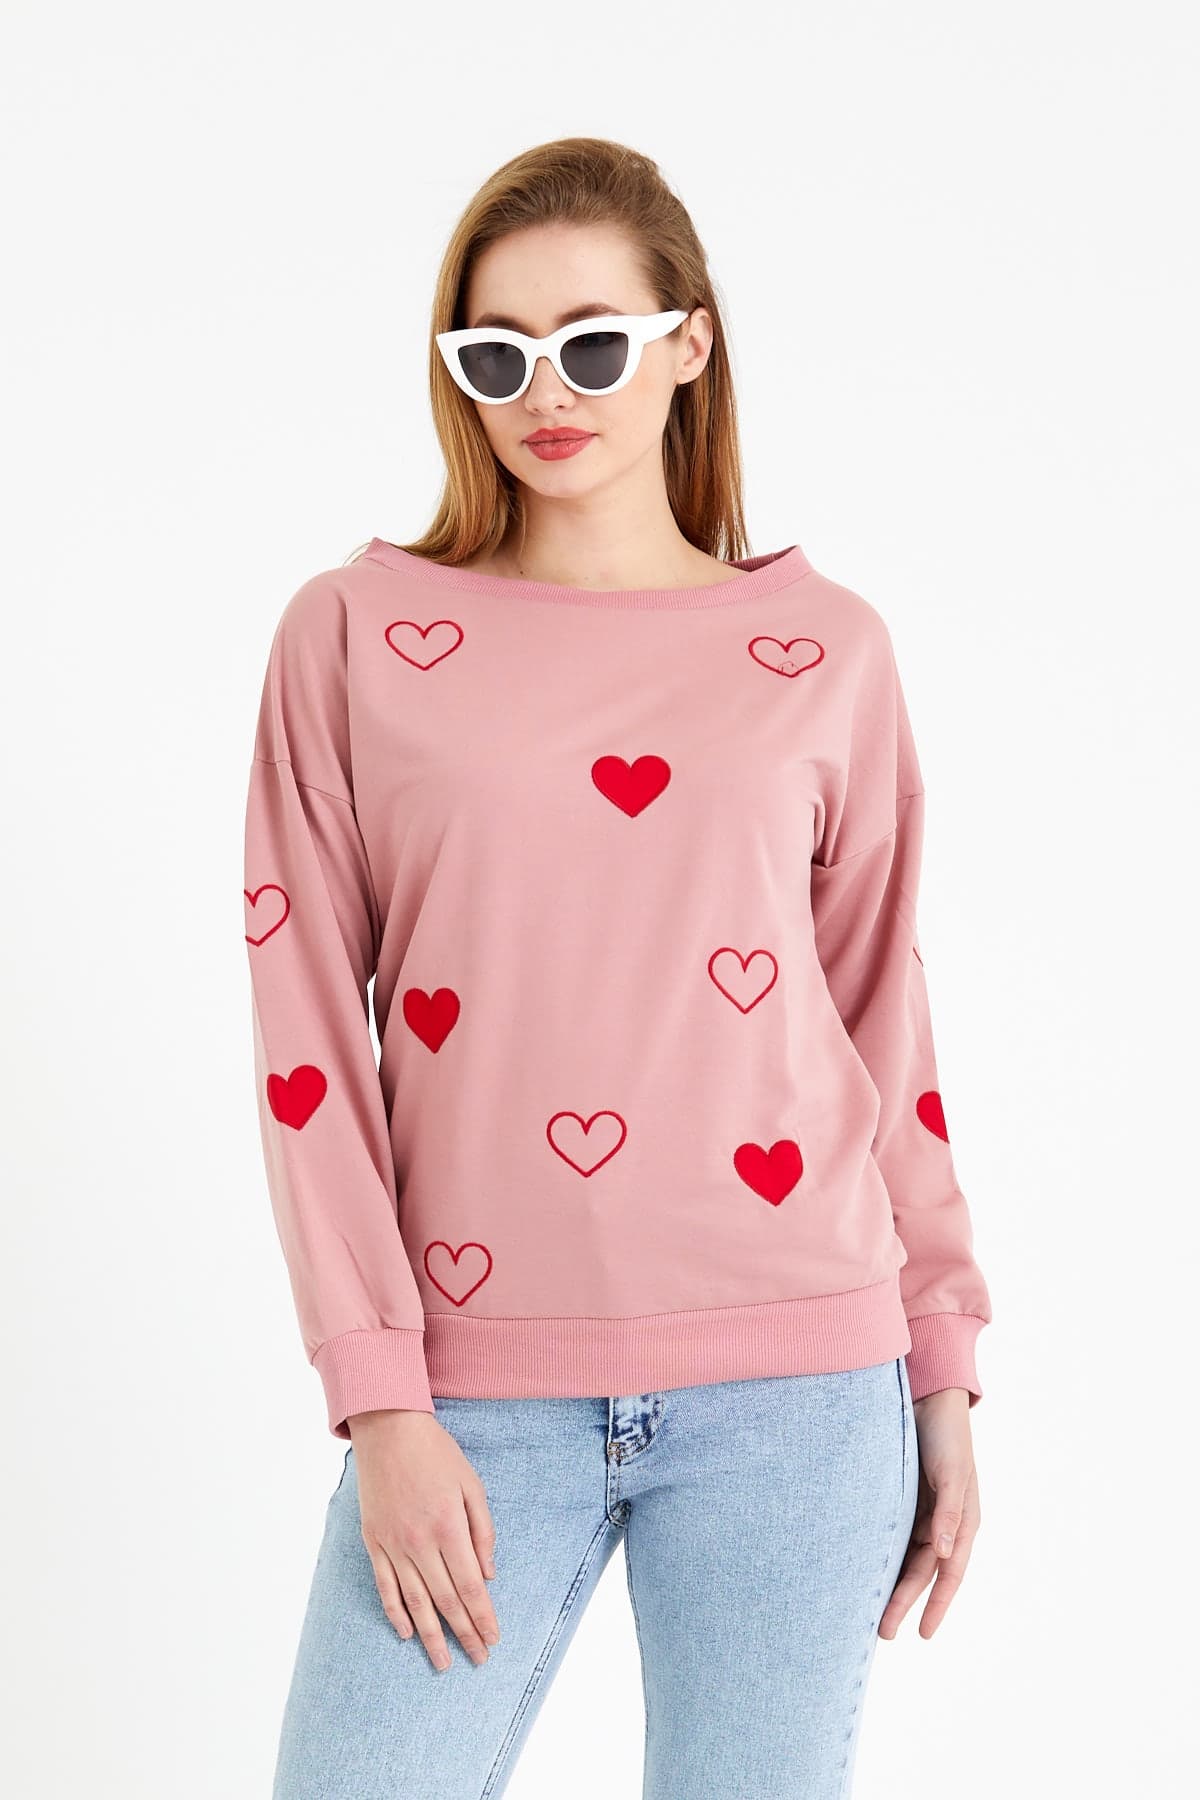 Oops 2014 Kalpli Kadın Sweatshirt